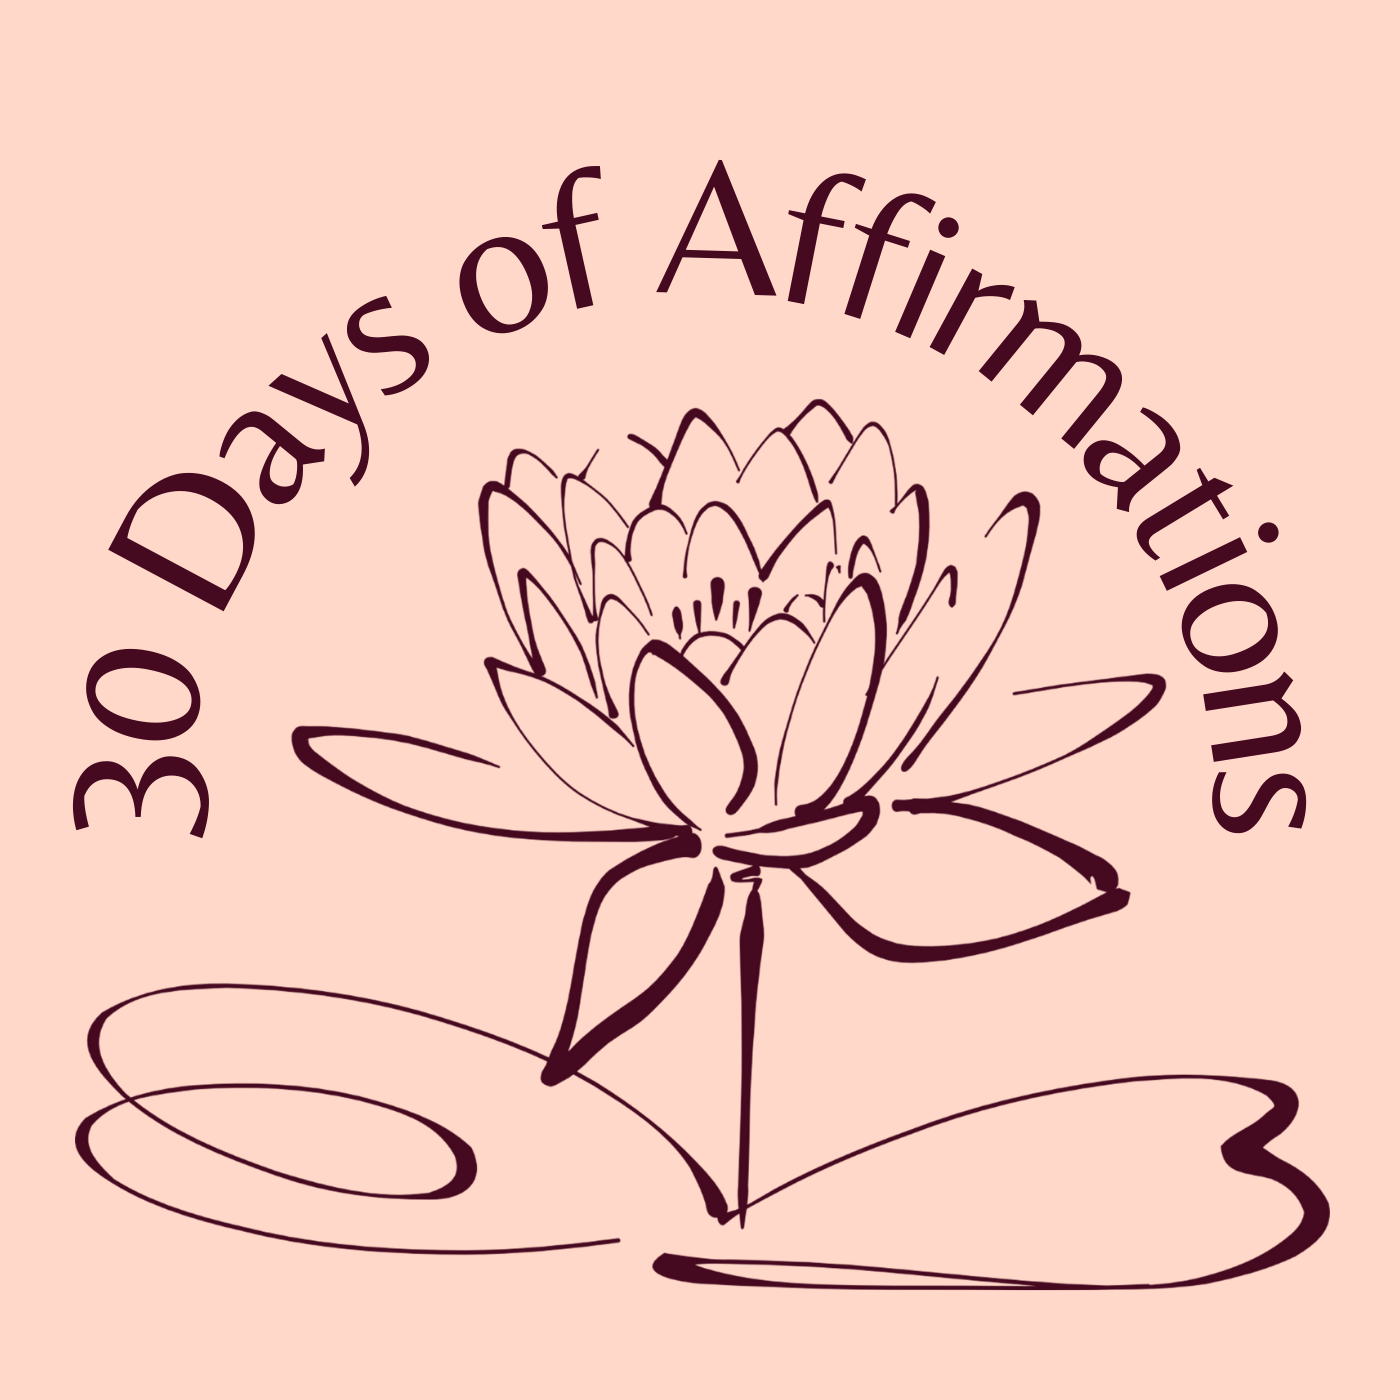 30 Days of Affirmations logo